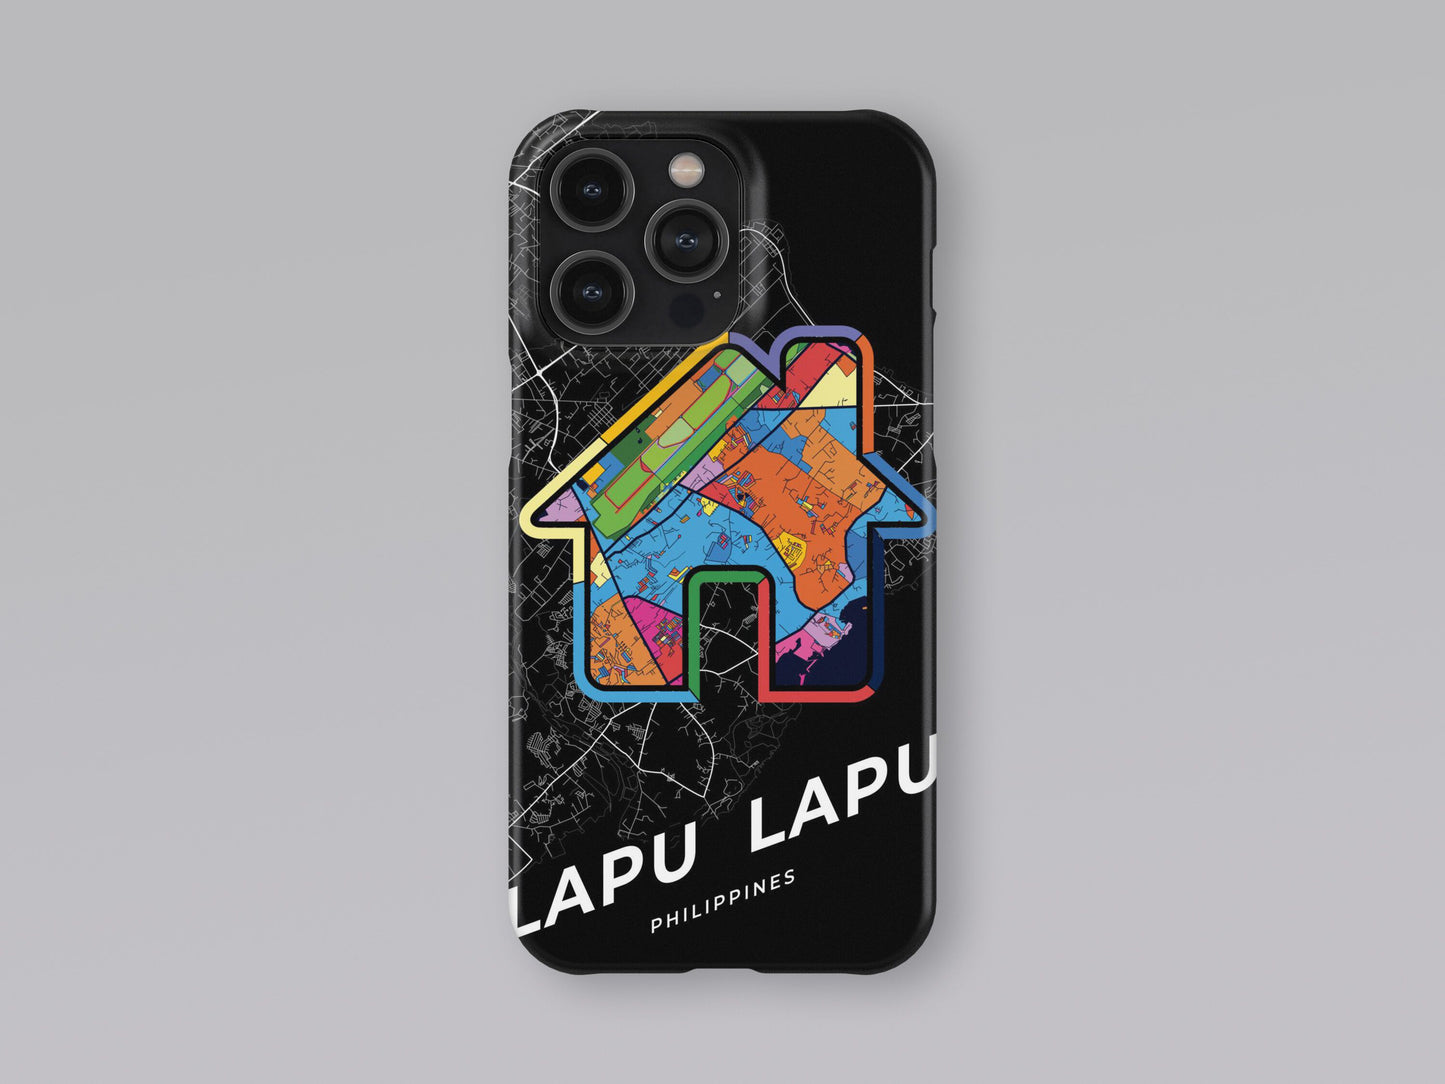 Lapu‑Lapu Philippines slim phone case with colorful icon. Birthday, wedding or housewarming gift. Couple match cases. 3